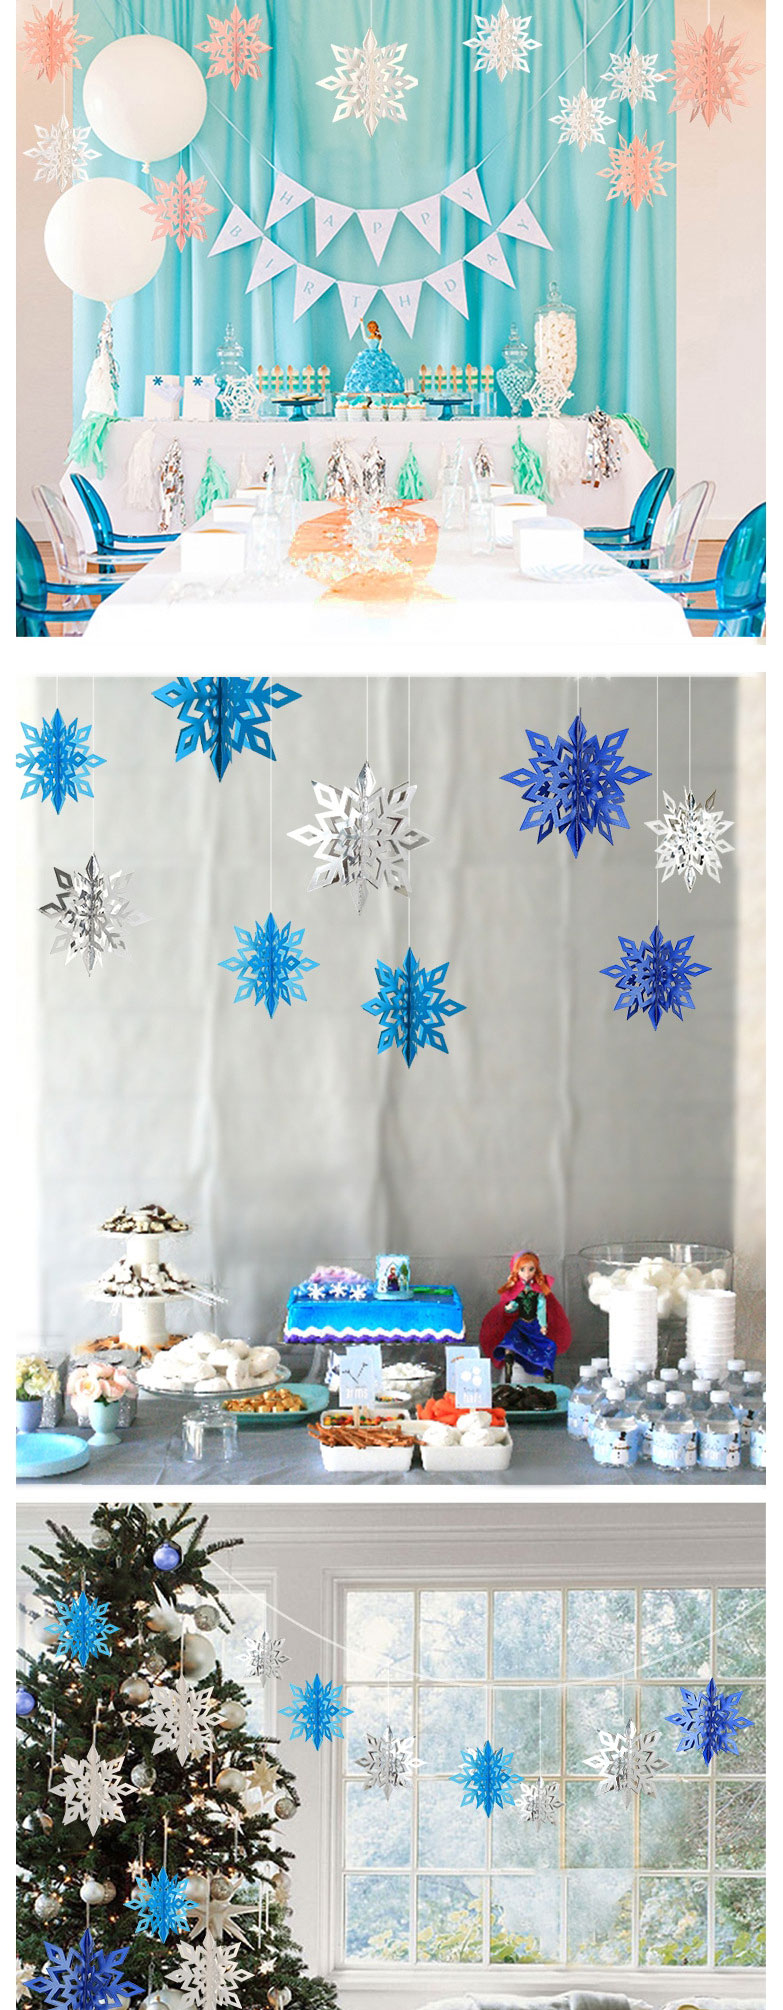 Fashion Light Blue Three-dimensional Snowflake (6 Piece Set) Christmas Three-dimensional Snowflake Pendant,Festival & Party Supplies